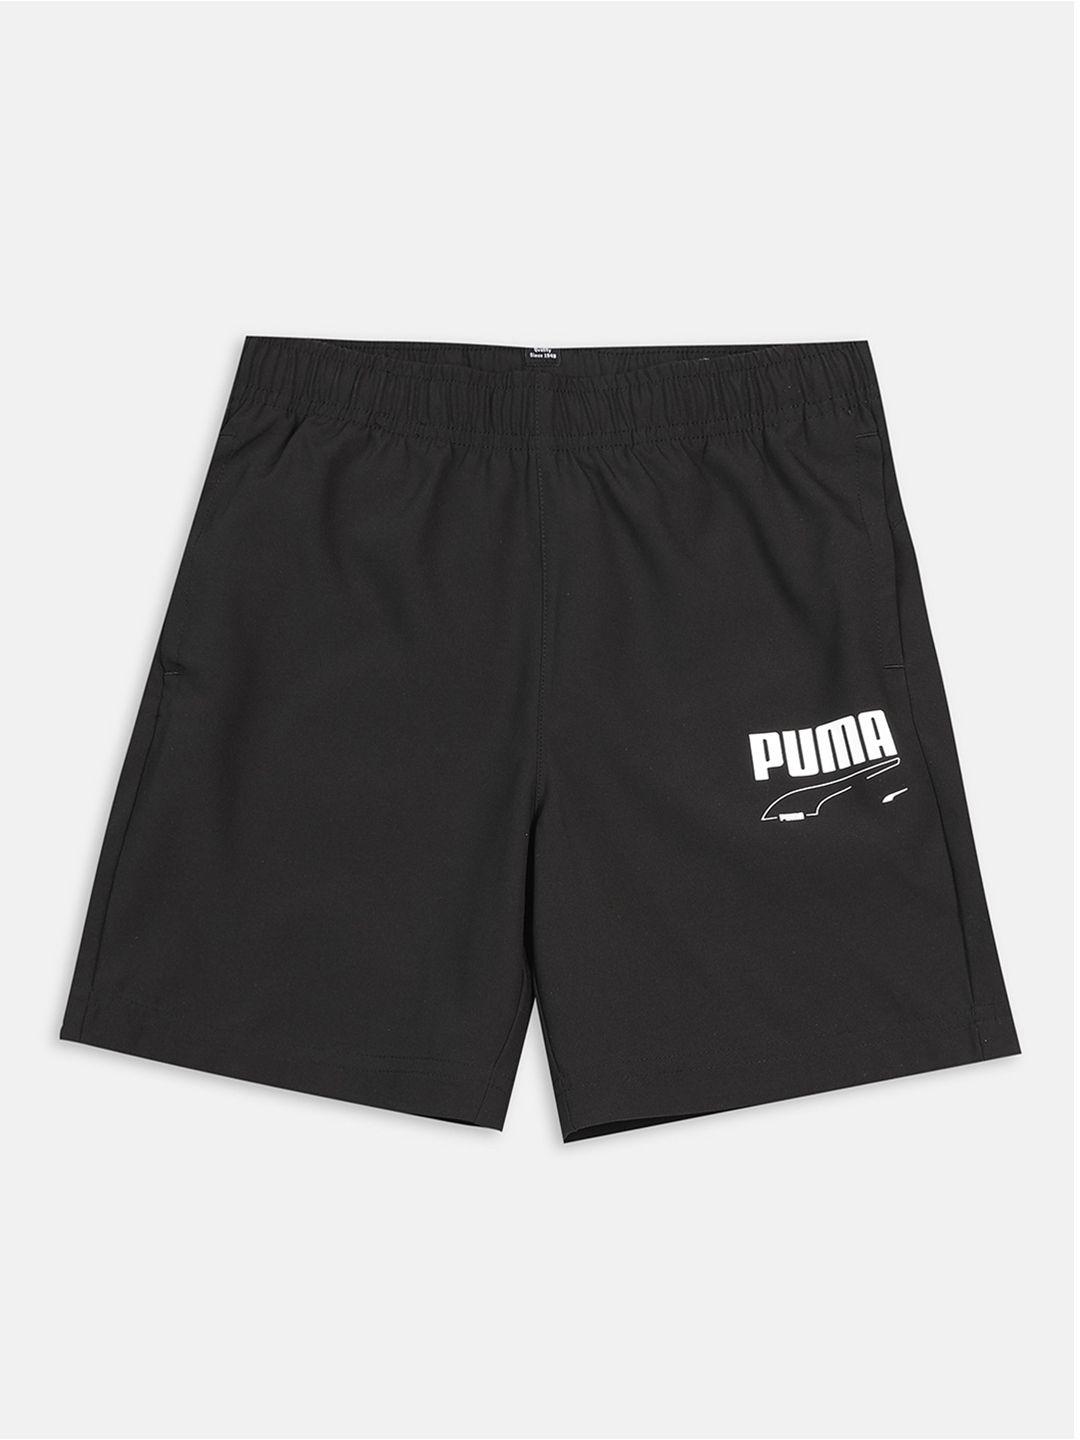 puma-boys-outdoor-rebel-woven-youth-sports-shorts